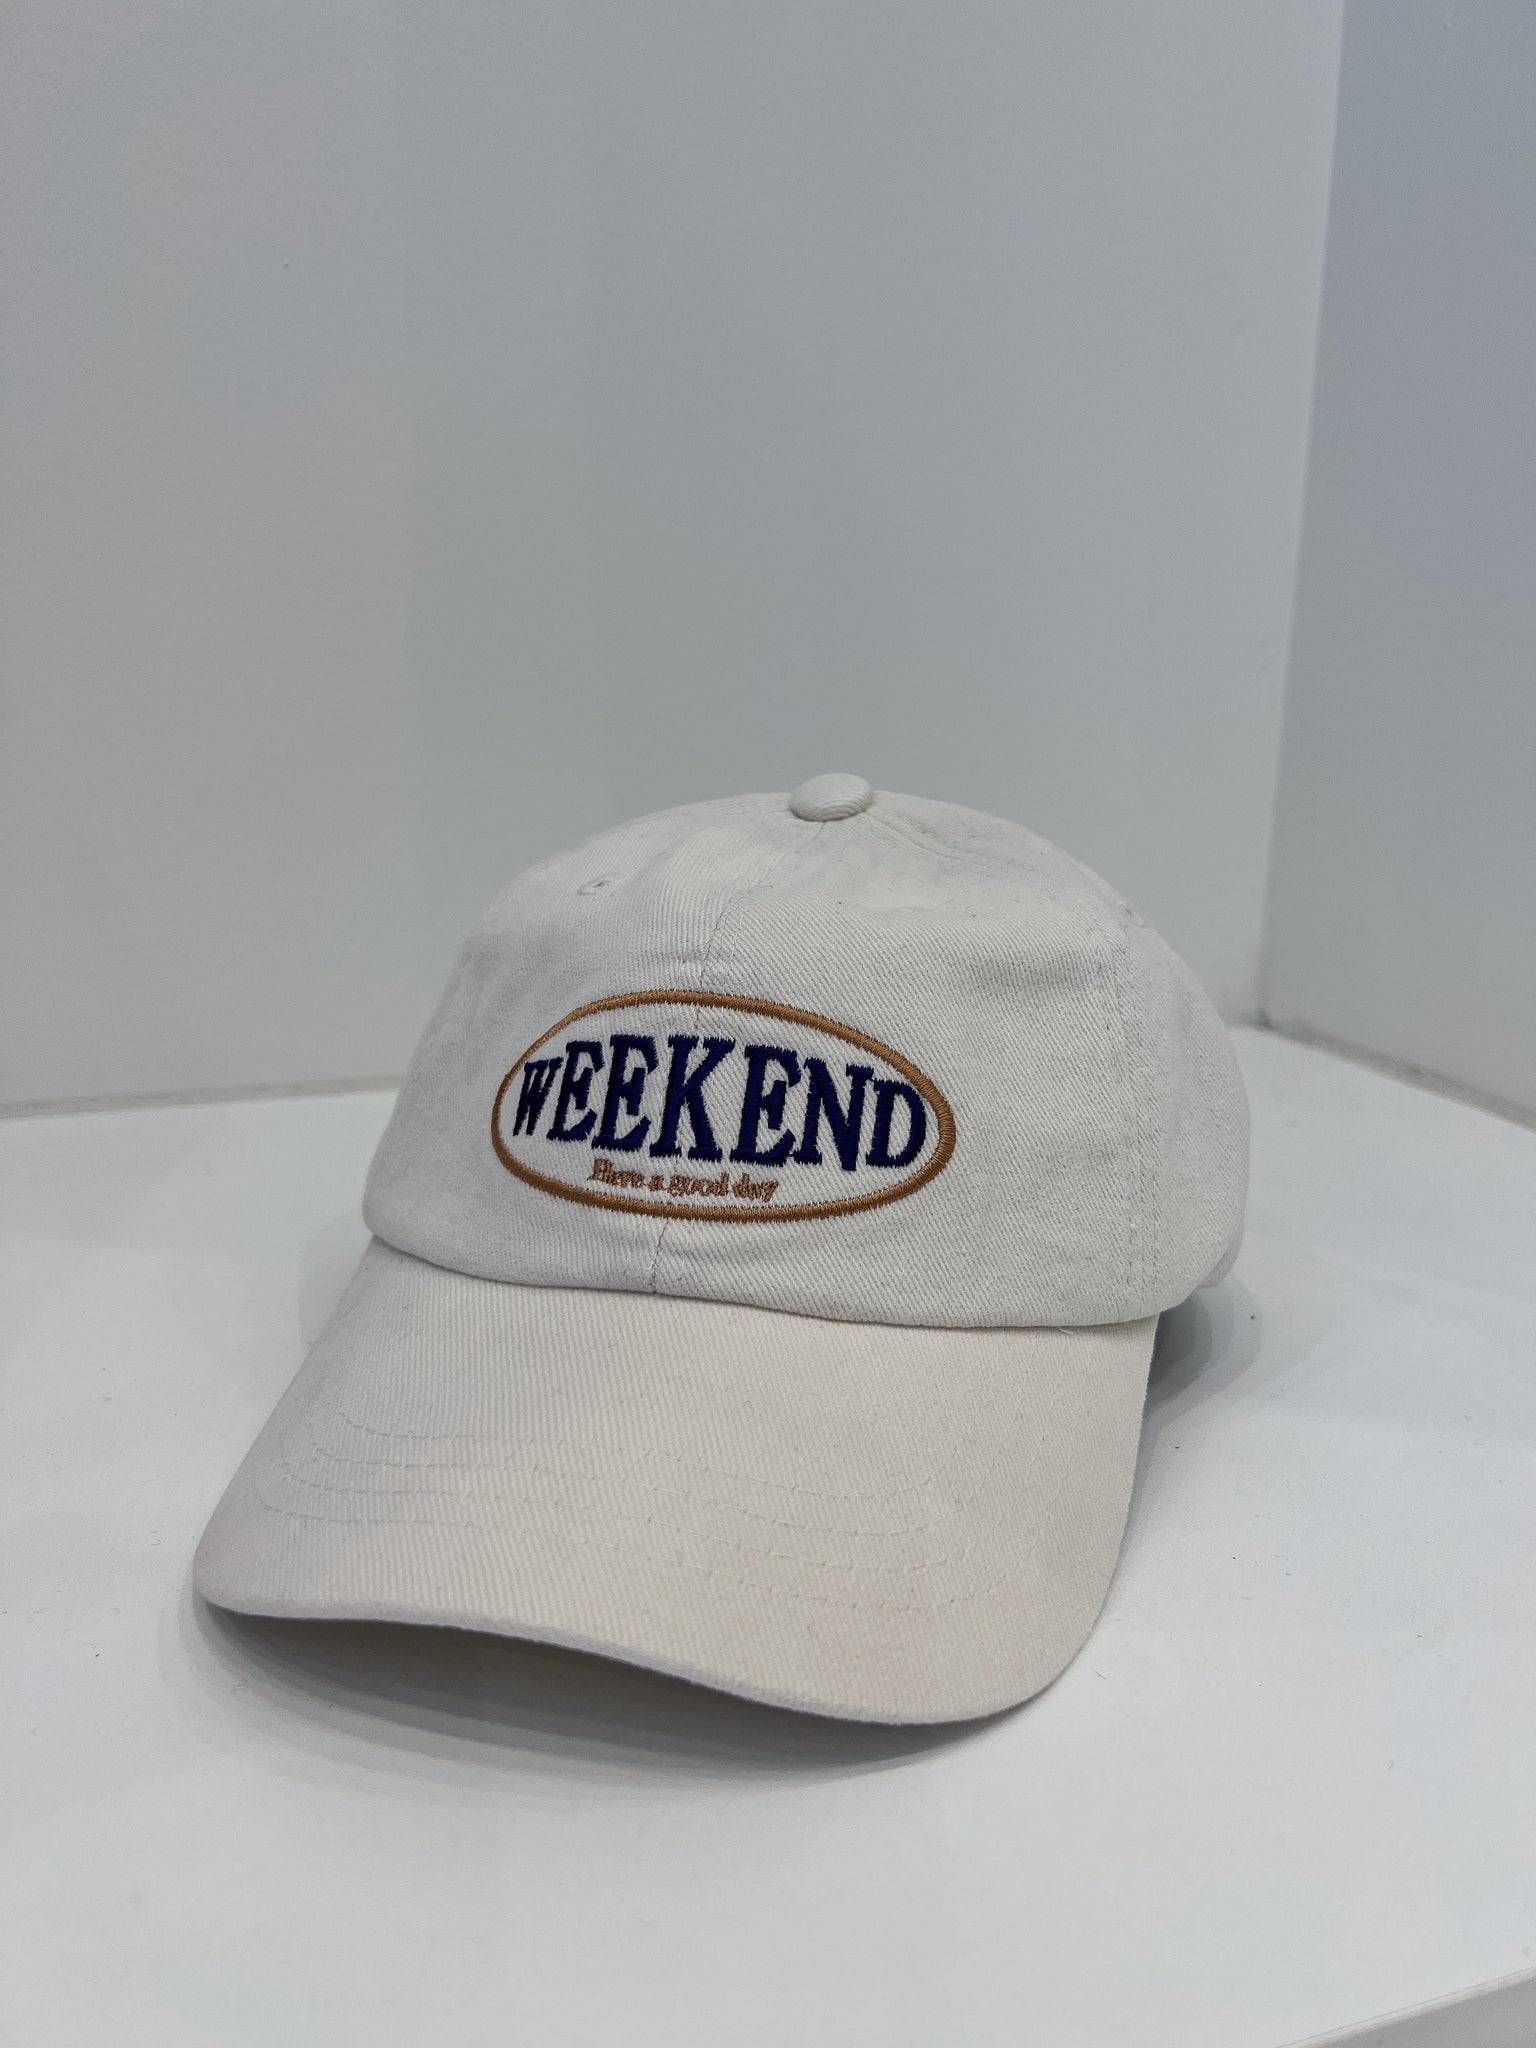 KIRK Weekend ball cap